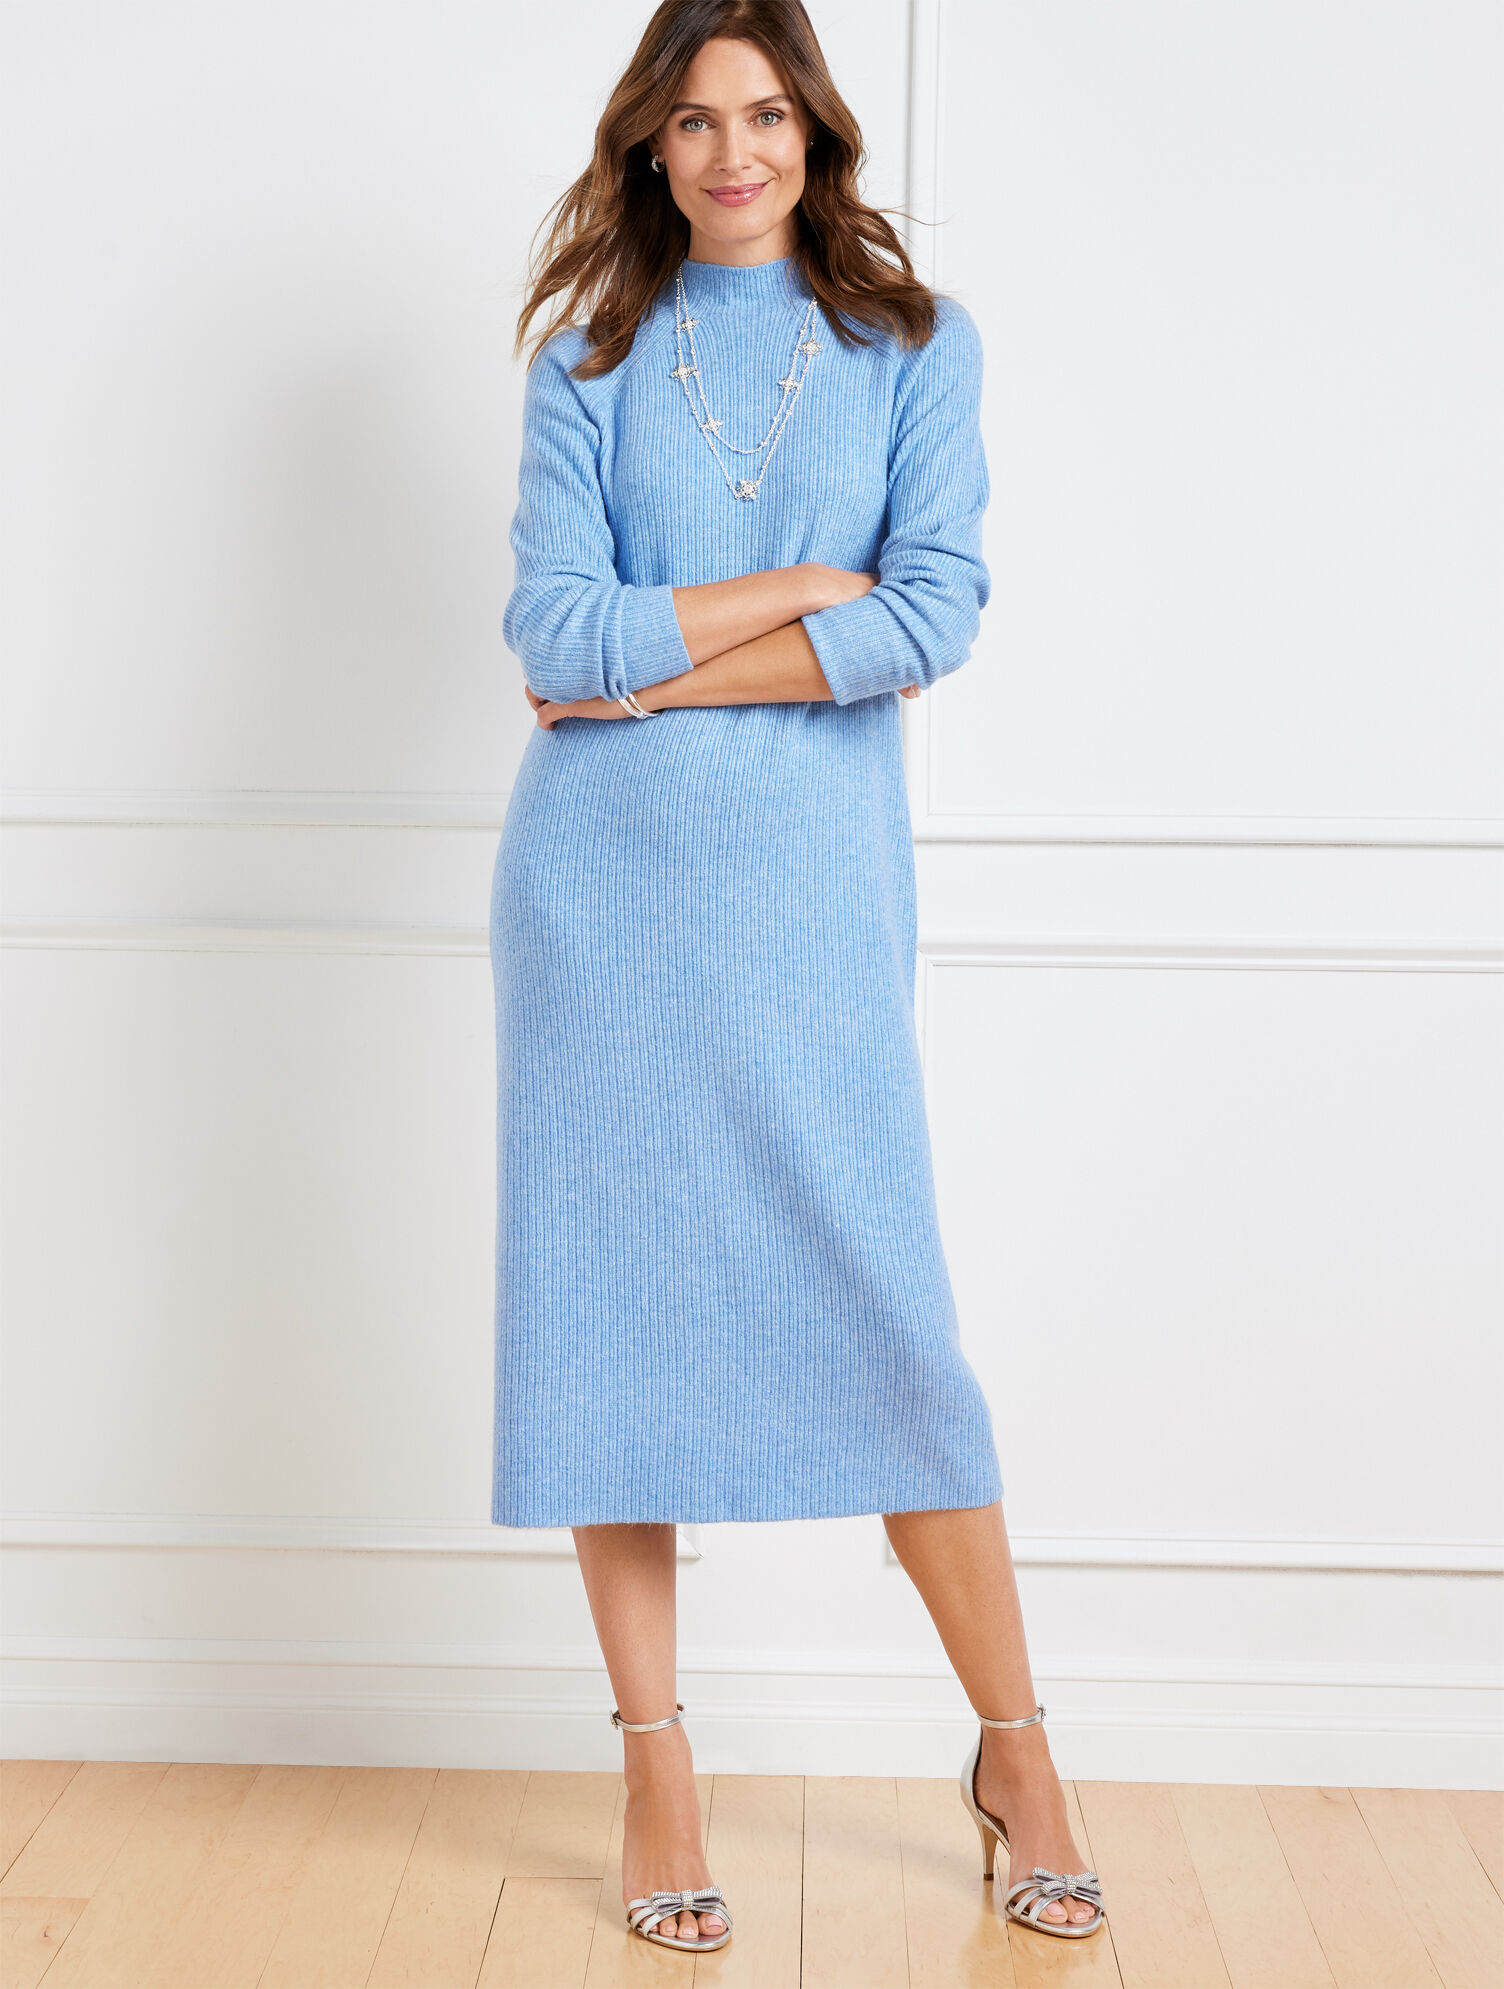 TALBOTS Women's Sleeveless Blue A-Line Knit Dress Size Petite 4P